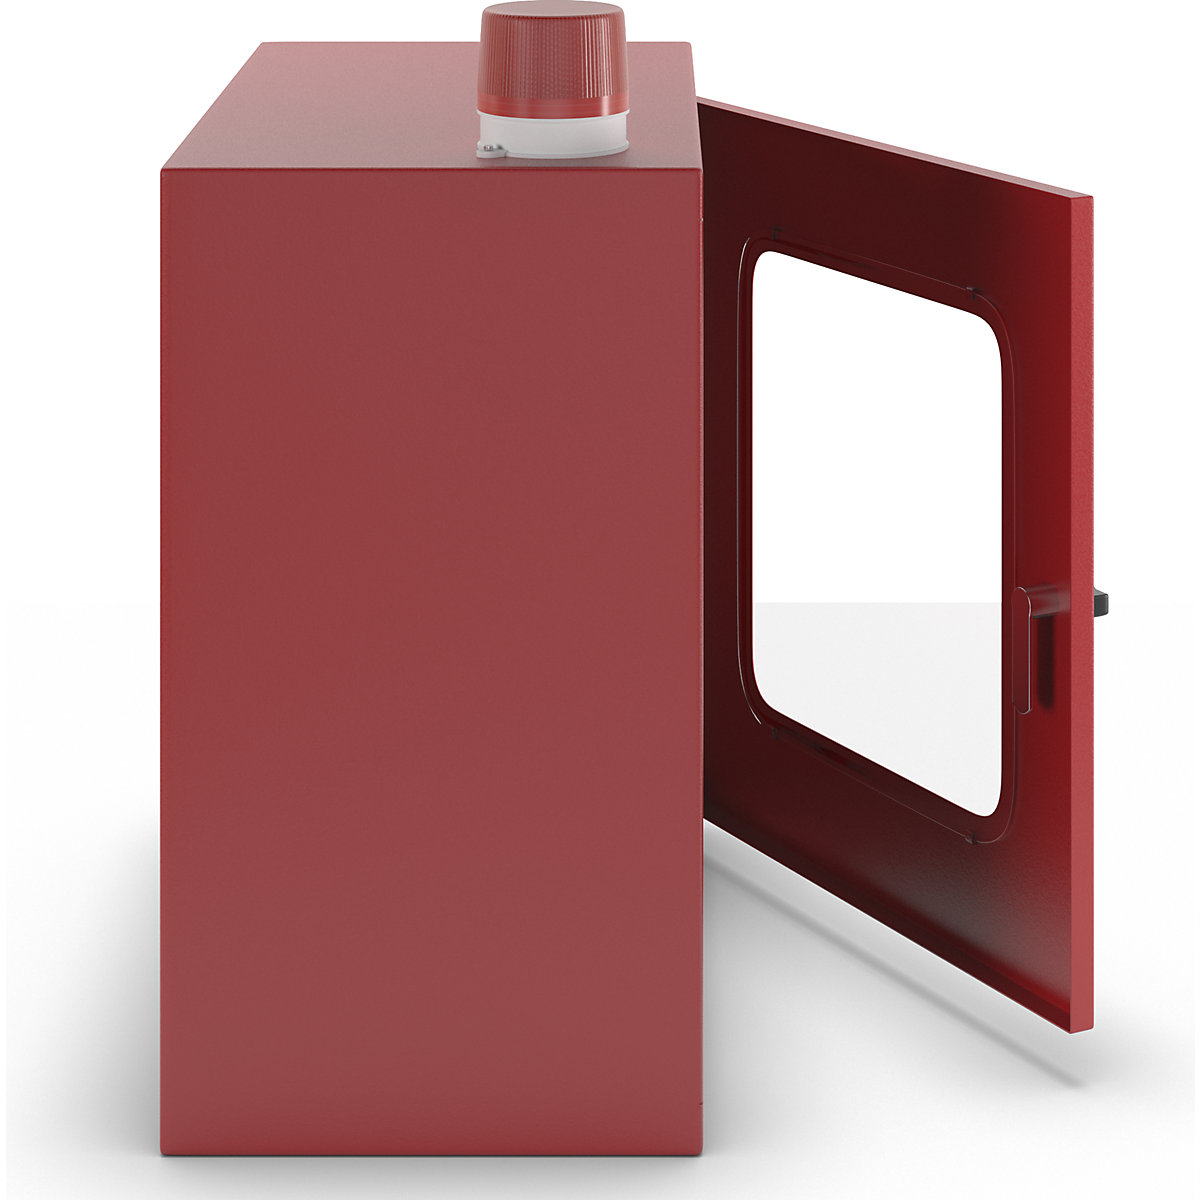 Defibrillator cupboard – Pavoy (Product illustration 3)-2